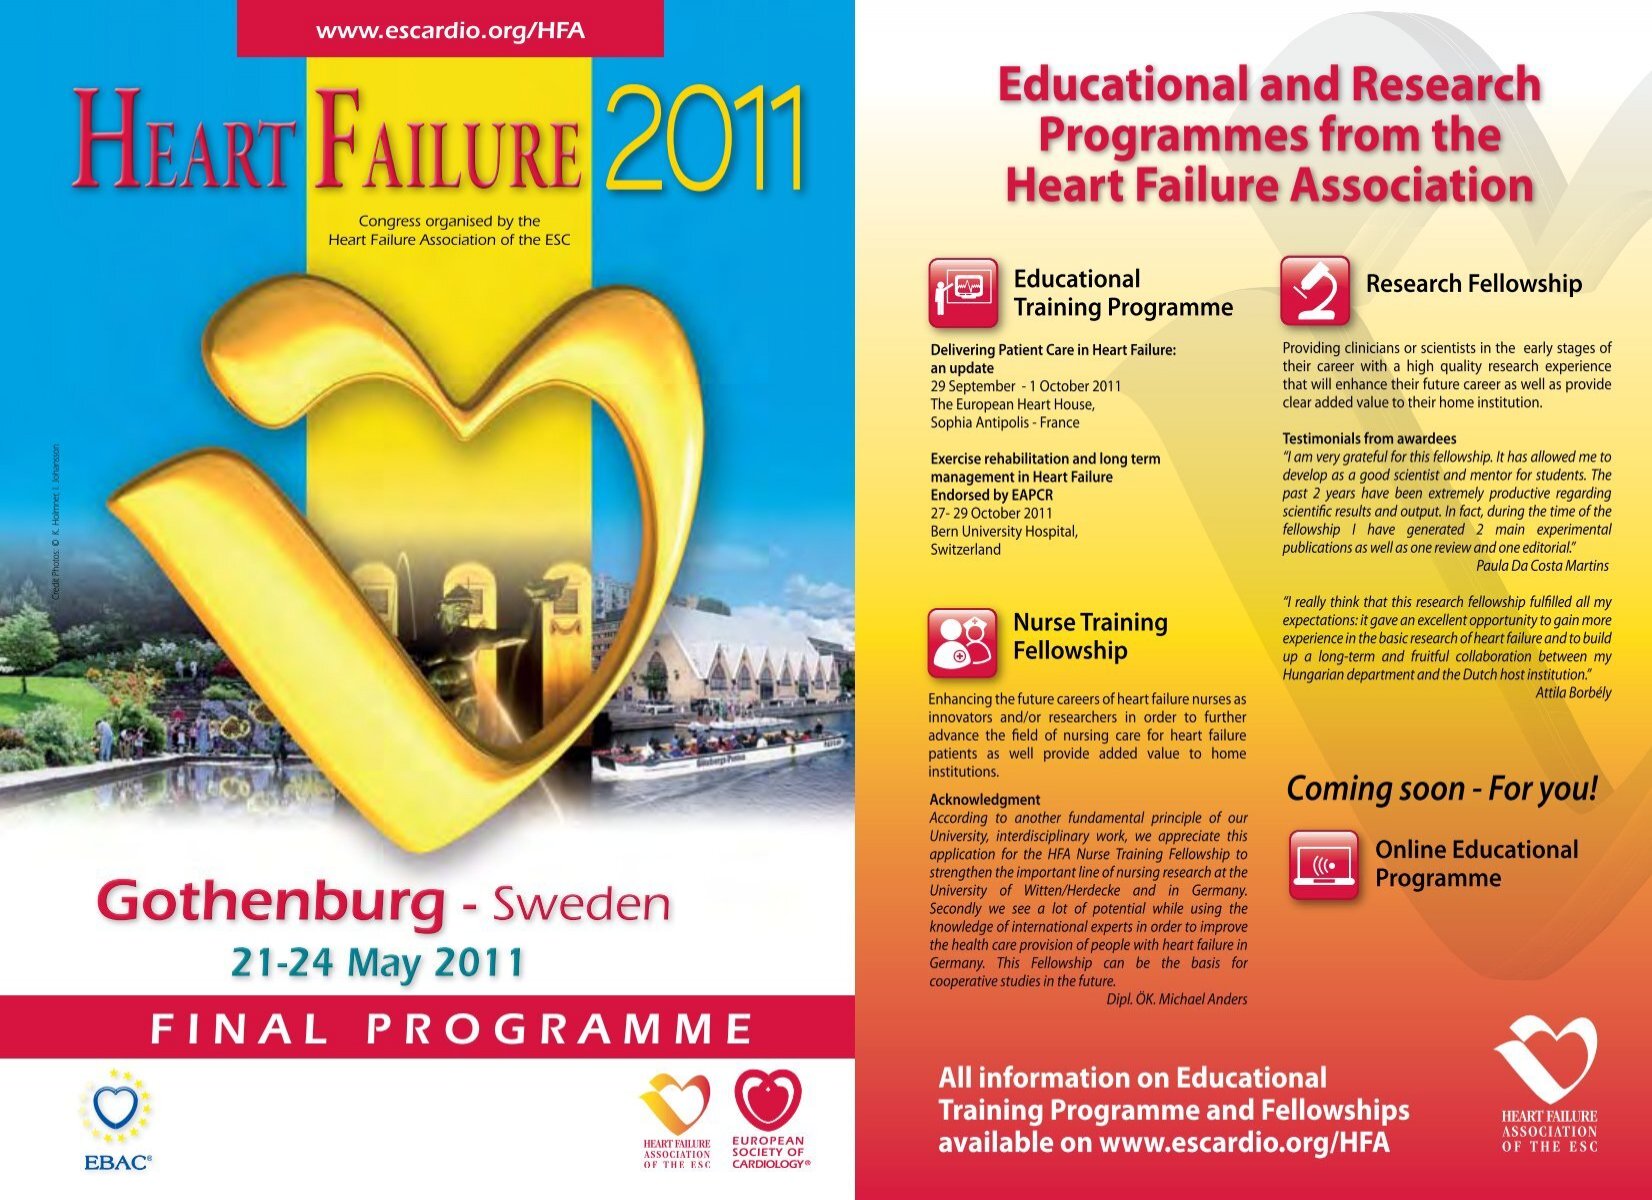 HEART FAILURE HEART FAILURE - European Society of Cardiology